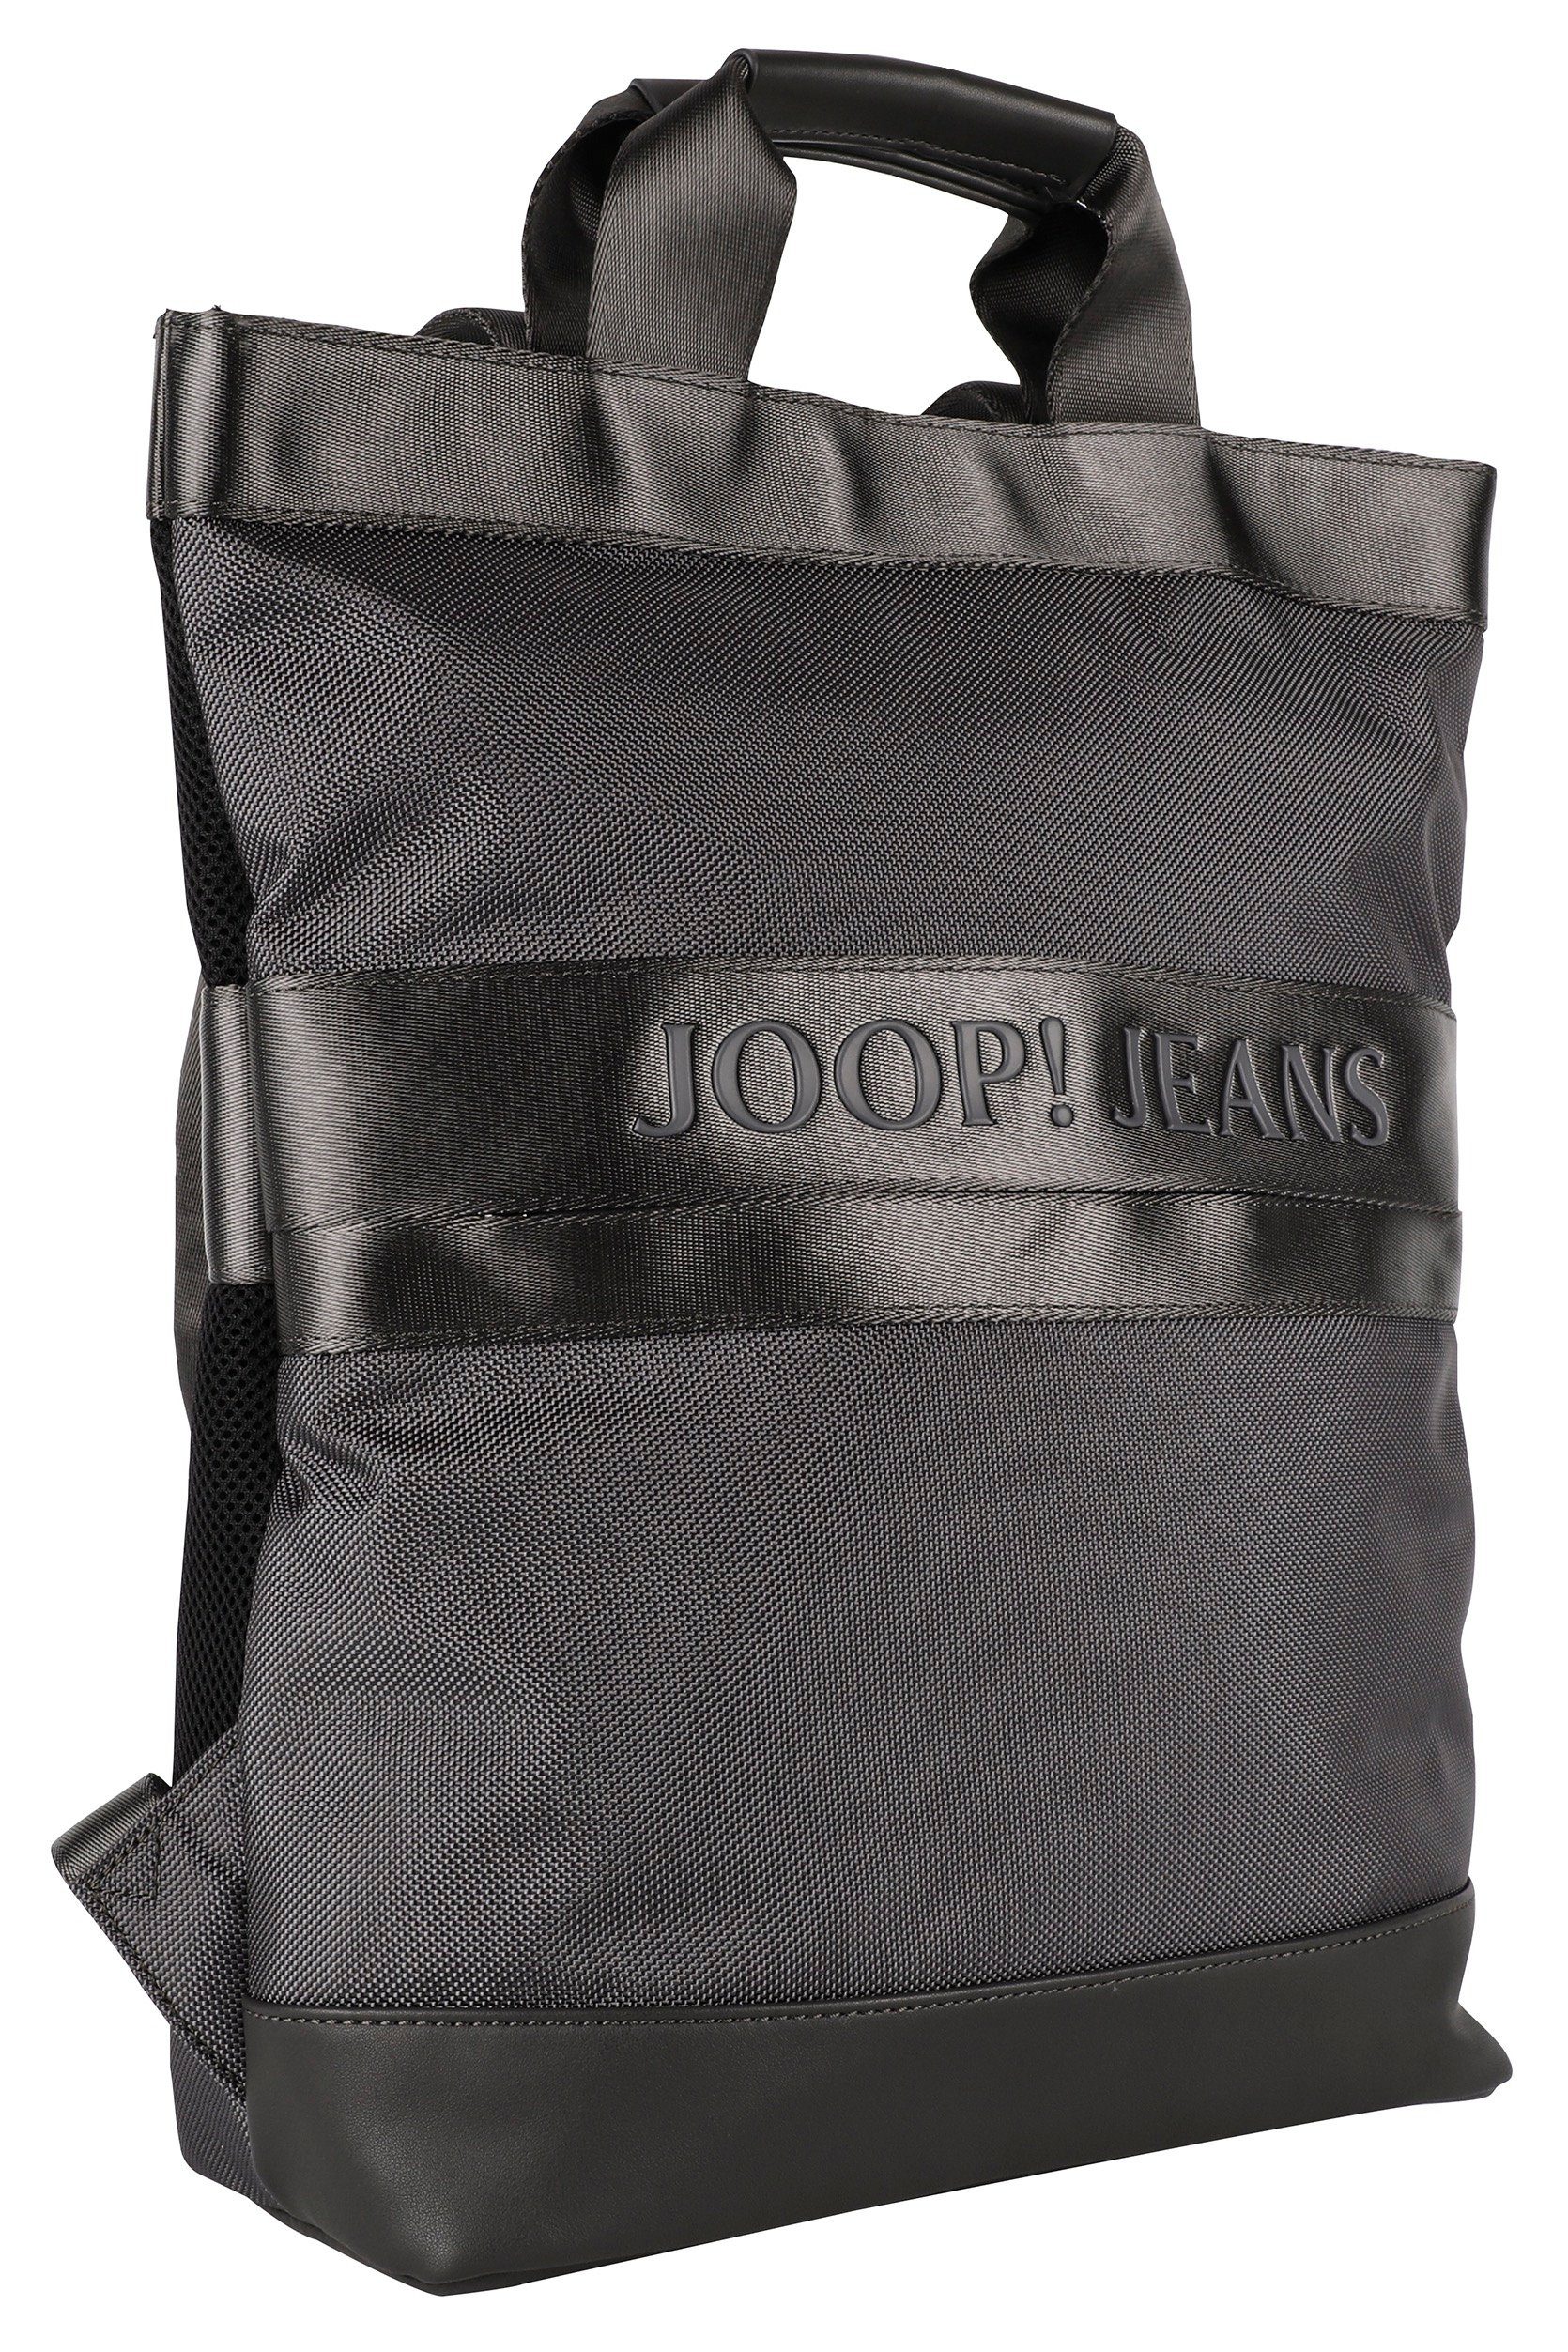 Joop Jeans Cityrucksack falk modica svz, dunkelgrau mit Reißverschluss-Vortasche backpack